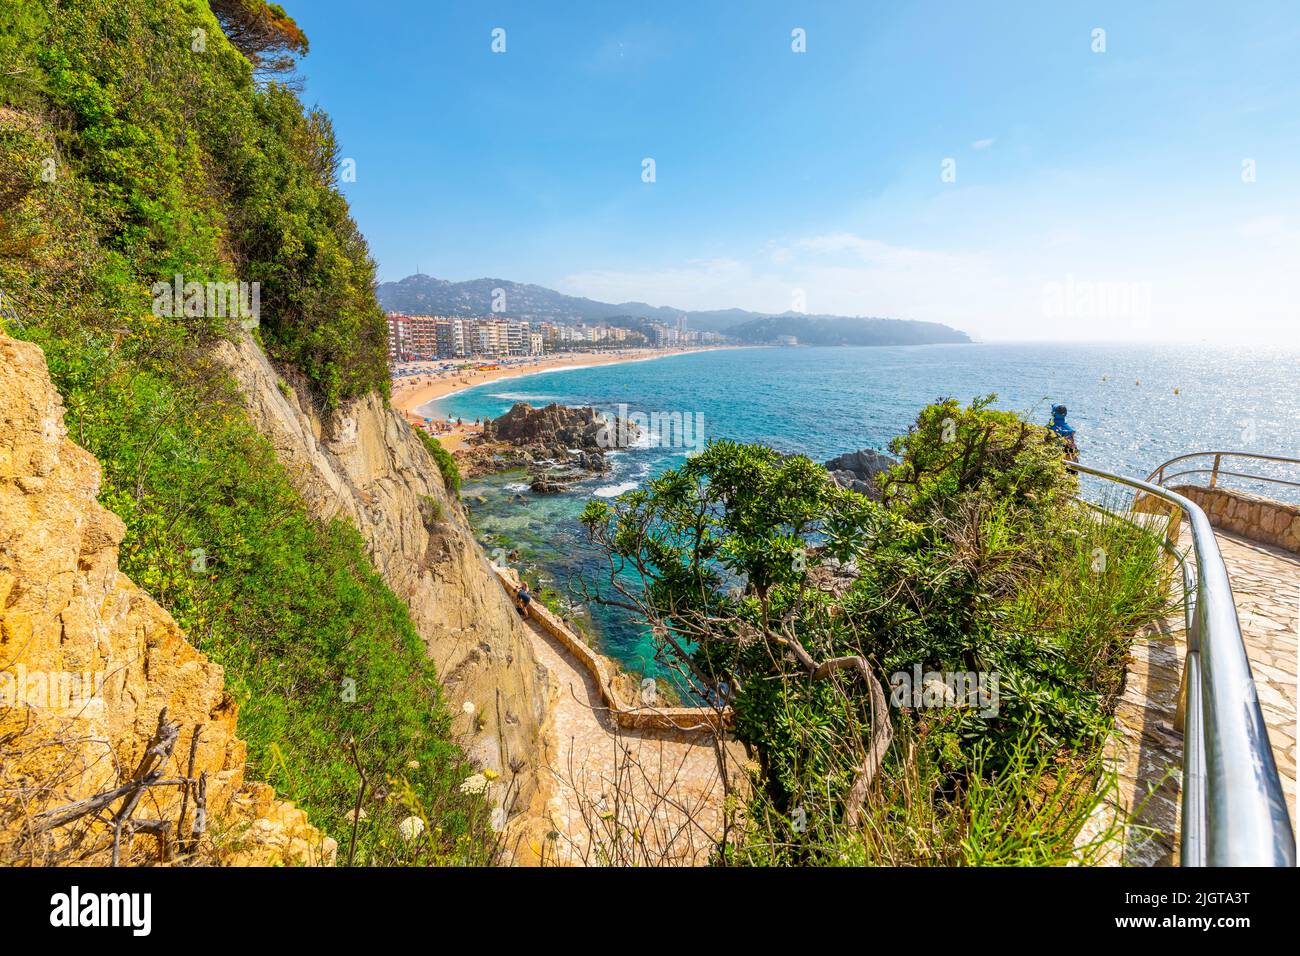 View of the sandy beach, rocky shoreline and resort town of Lloret de Mar, Spain, on the Costa Brava coast of the Mediterranean Sea. Stock Photo